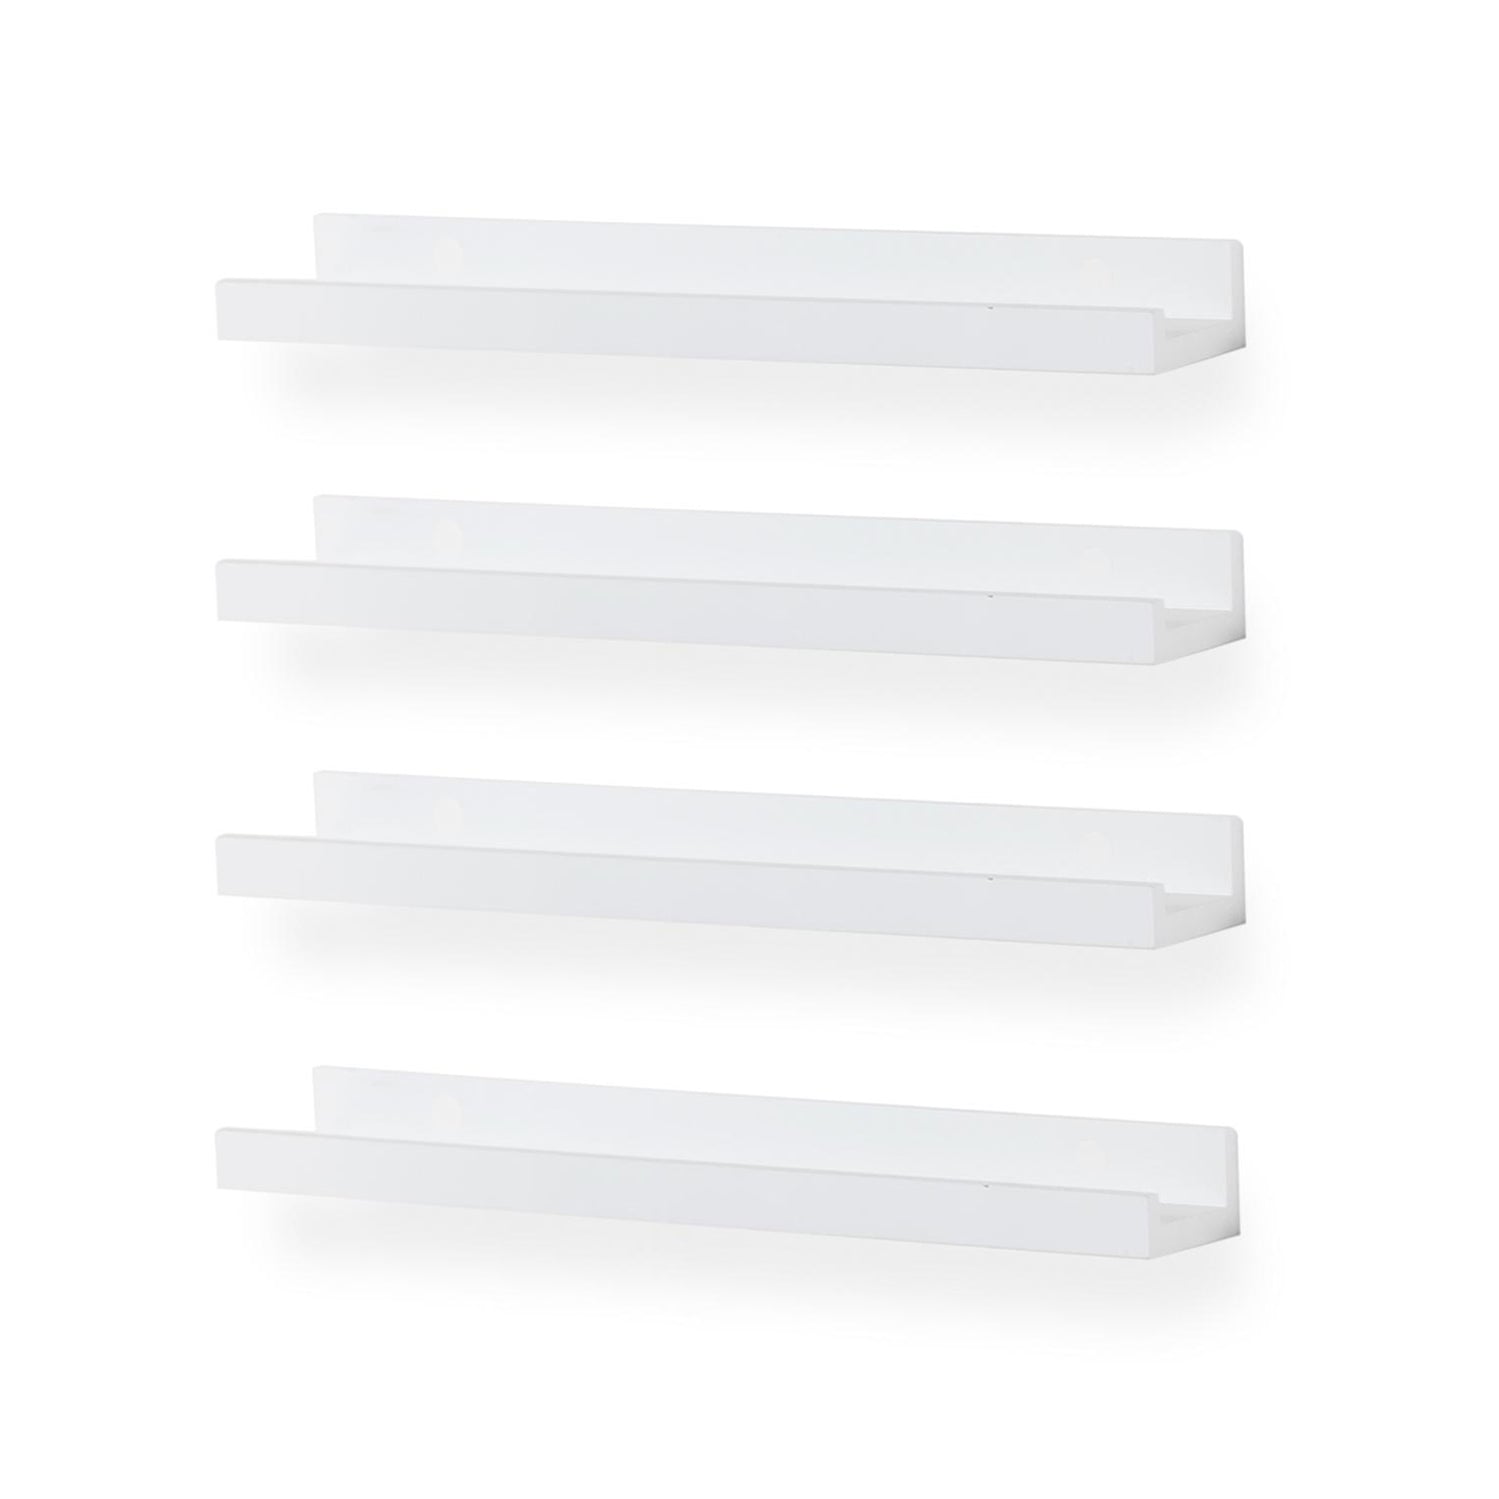 DENVER Floating Shelves Wall Bookshelf and Nursery Decor – 17” Length x 3.8" Depth – Set of 4 - White, Black - Wallniture